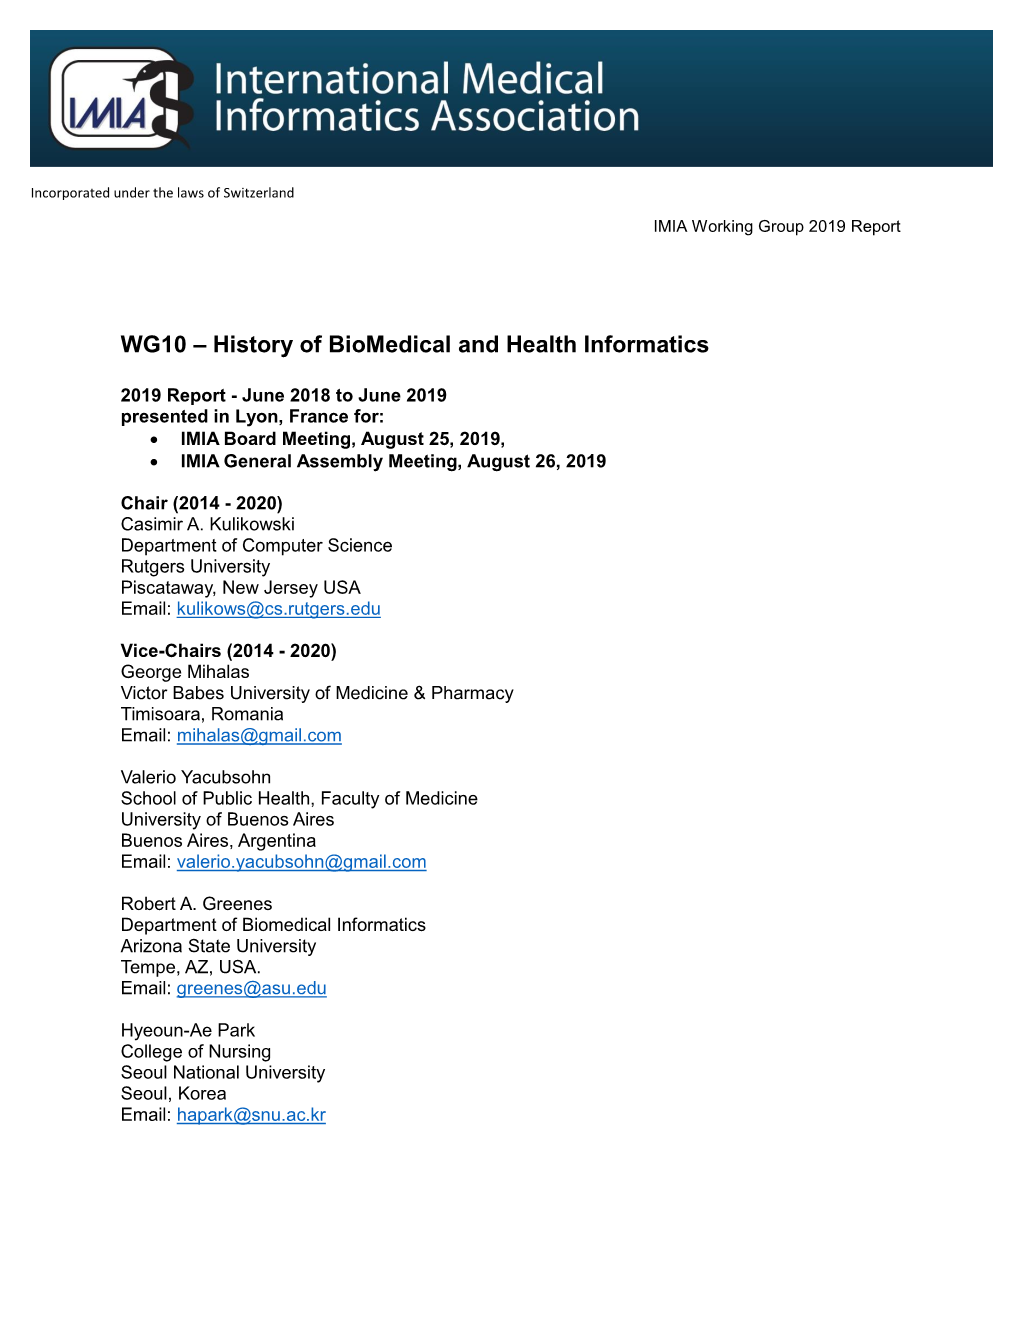 WG10 – History of Biomedical and Health Informatics